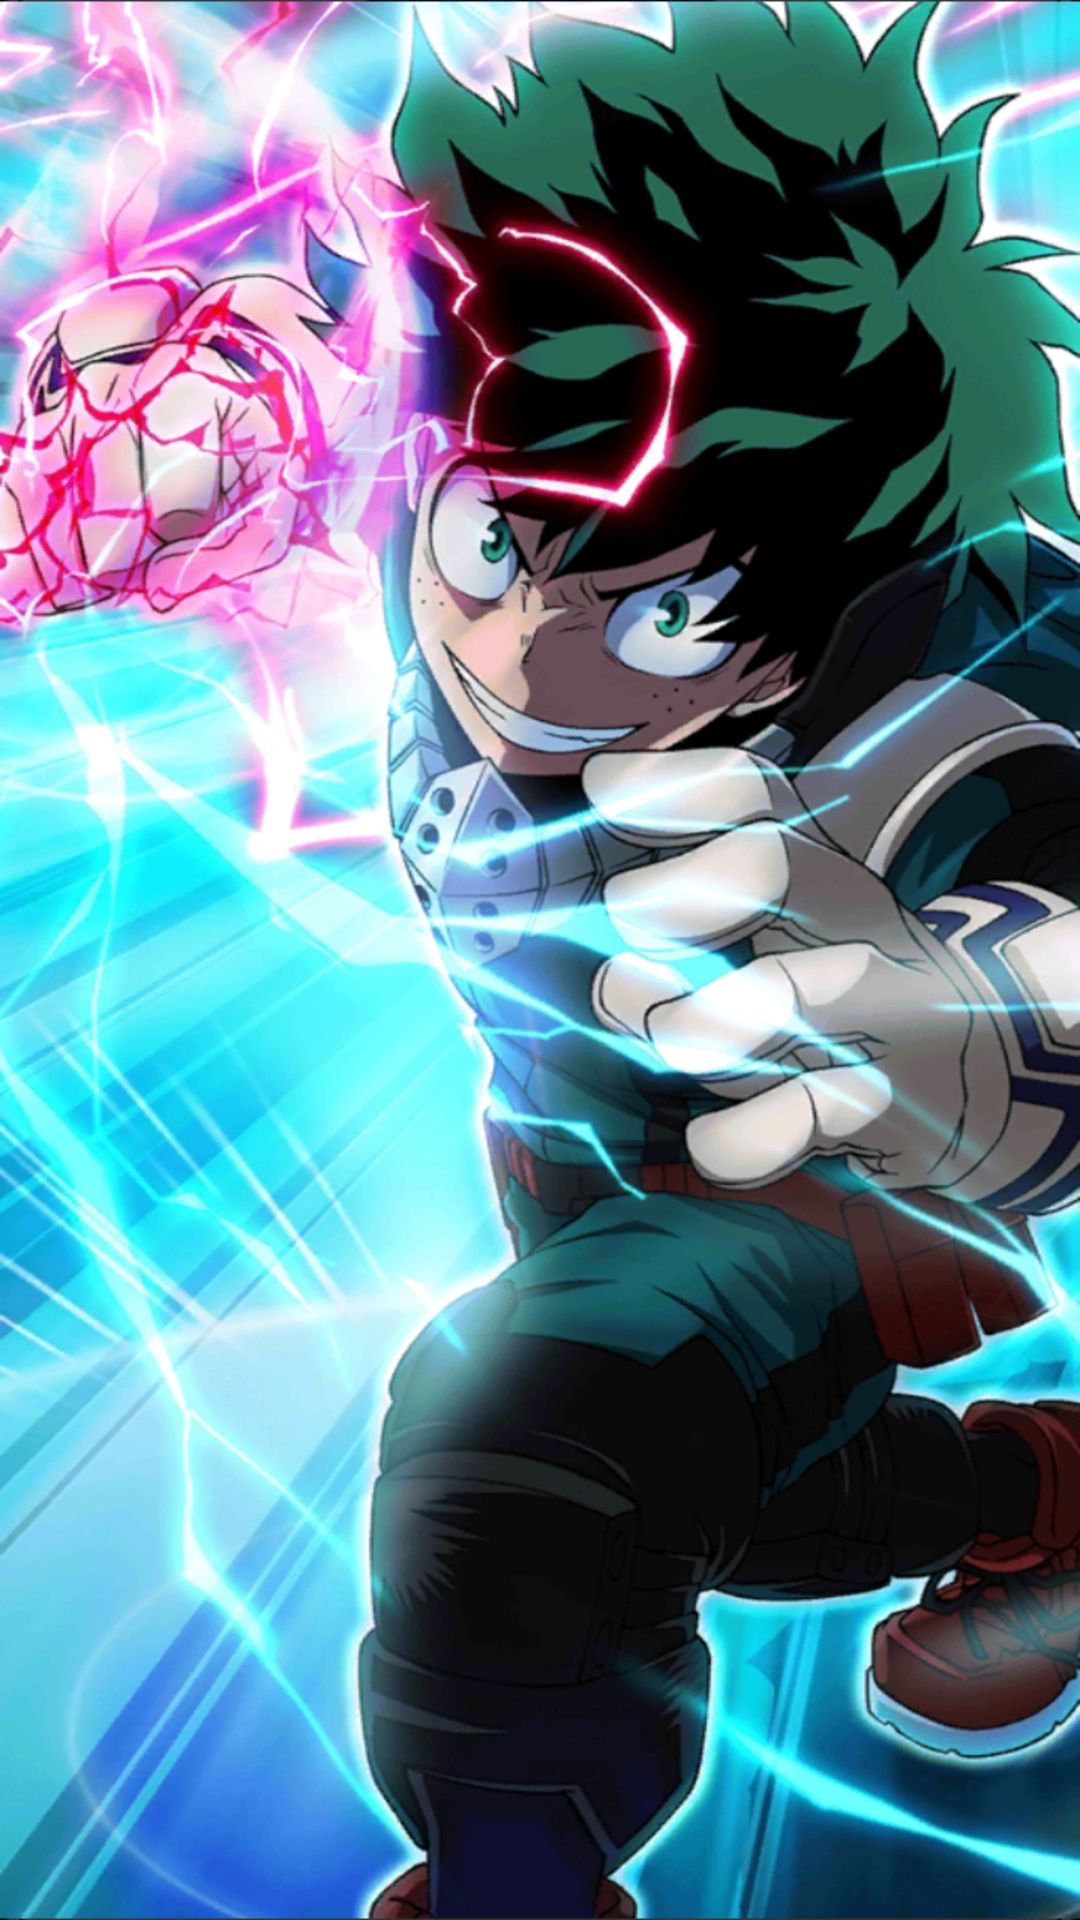 My Hero Academia - Izuku Midoriya,Hero Name (Deku) 2K wallpaper download